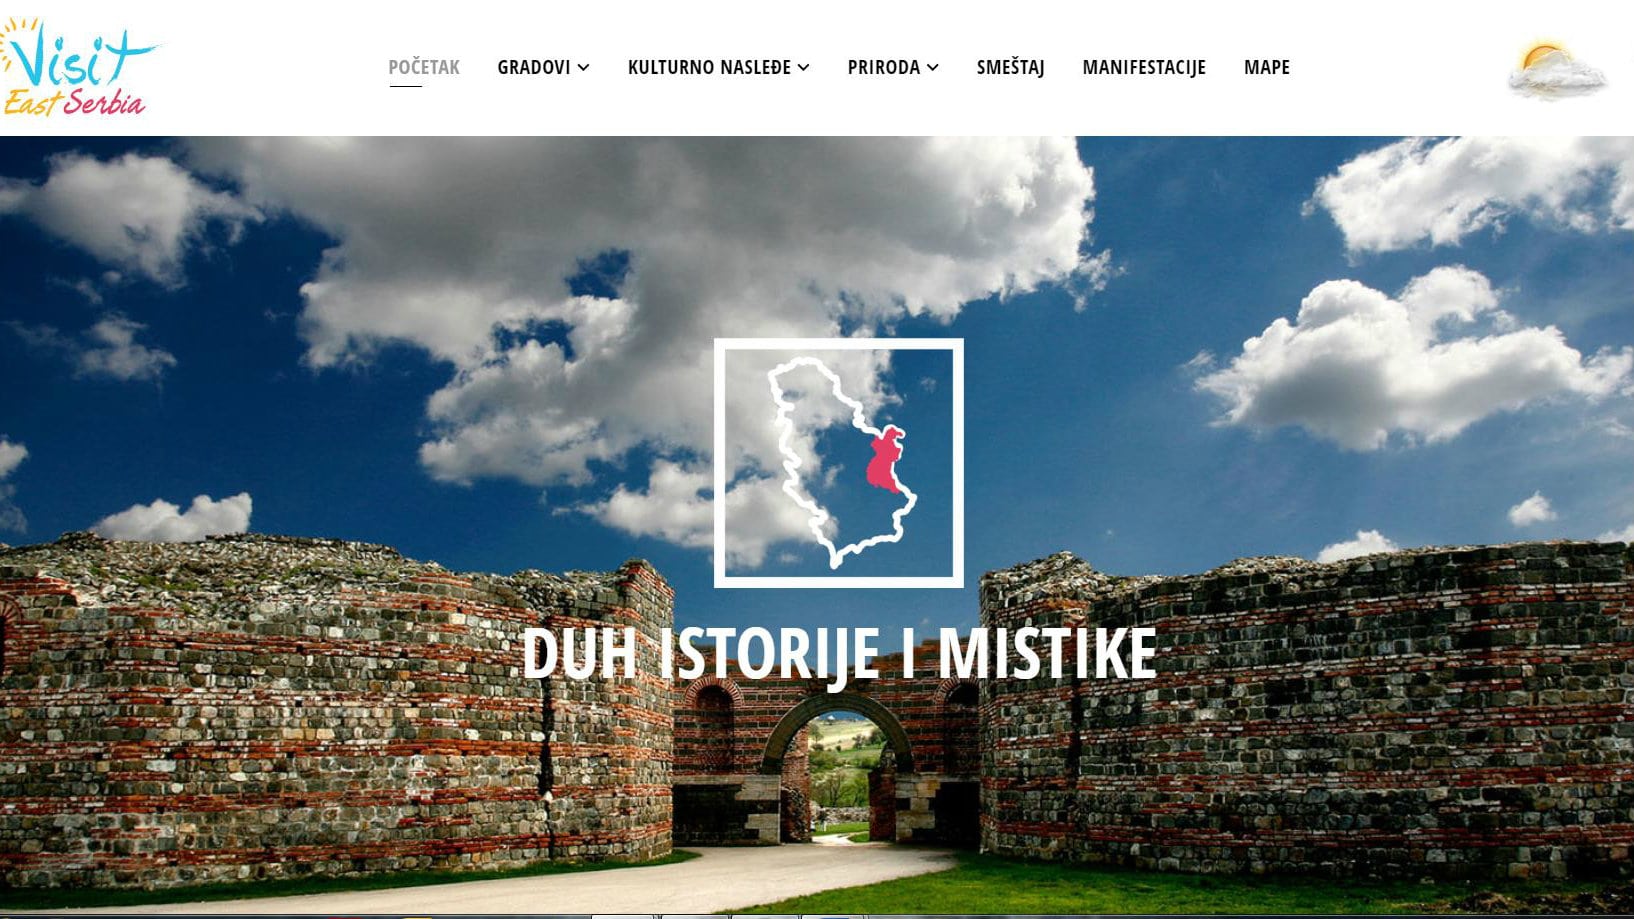 Regionalna turistička web platforma istočne Srbije „Visit East Serbia“ 1